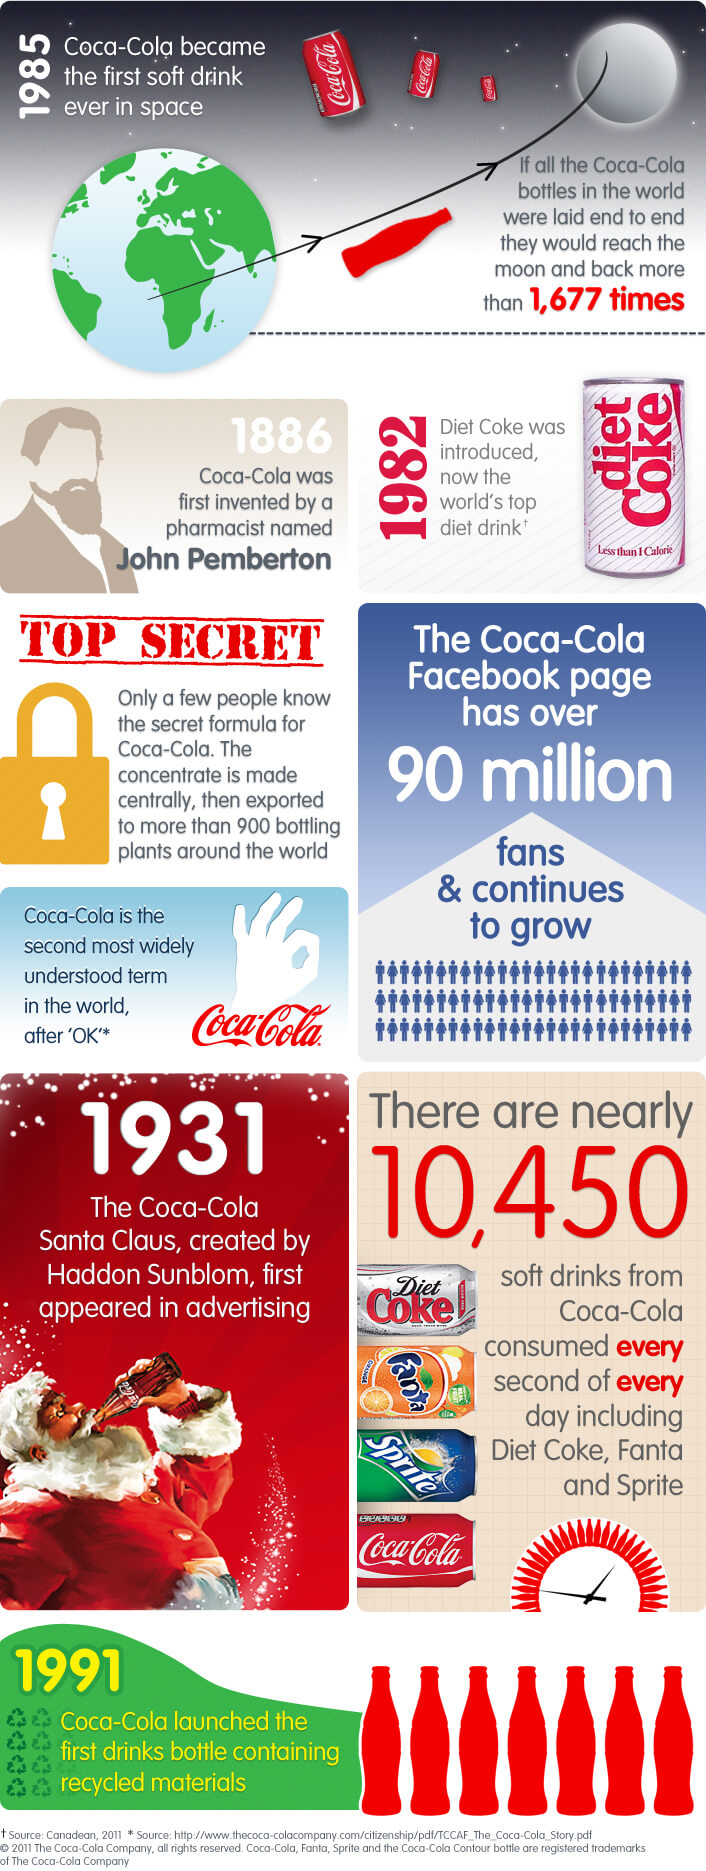 Coca Cola 125 Years Anniversary